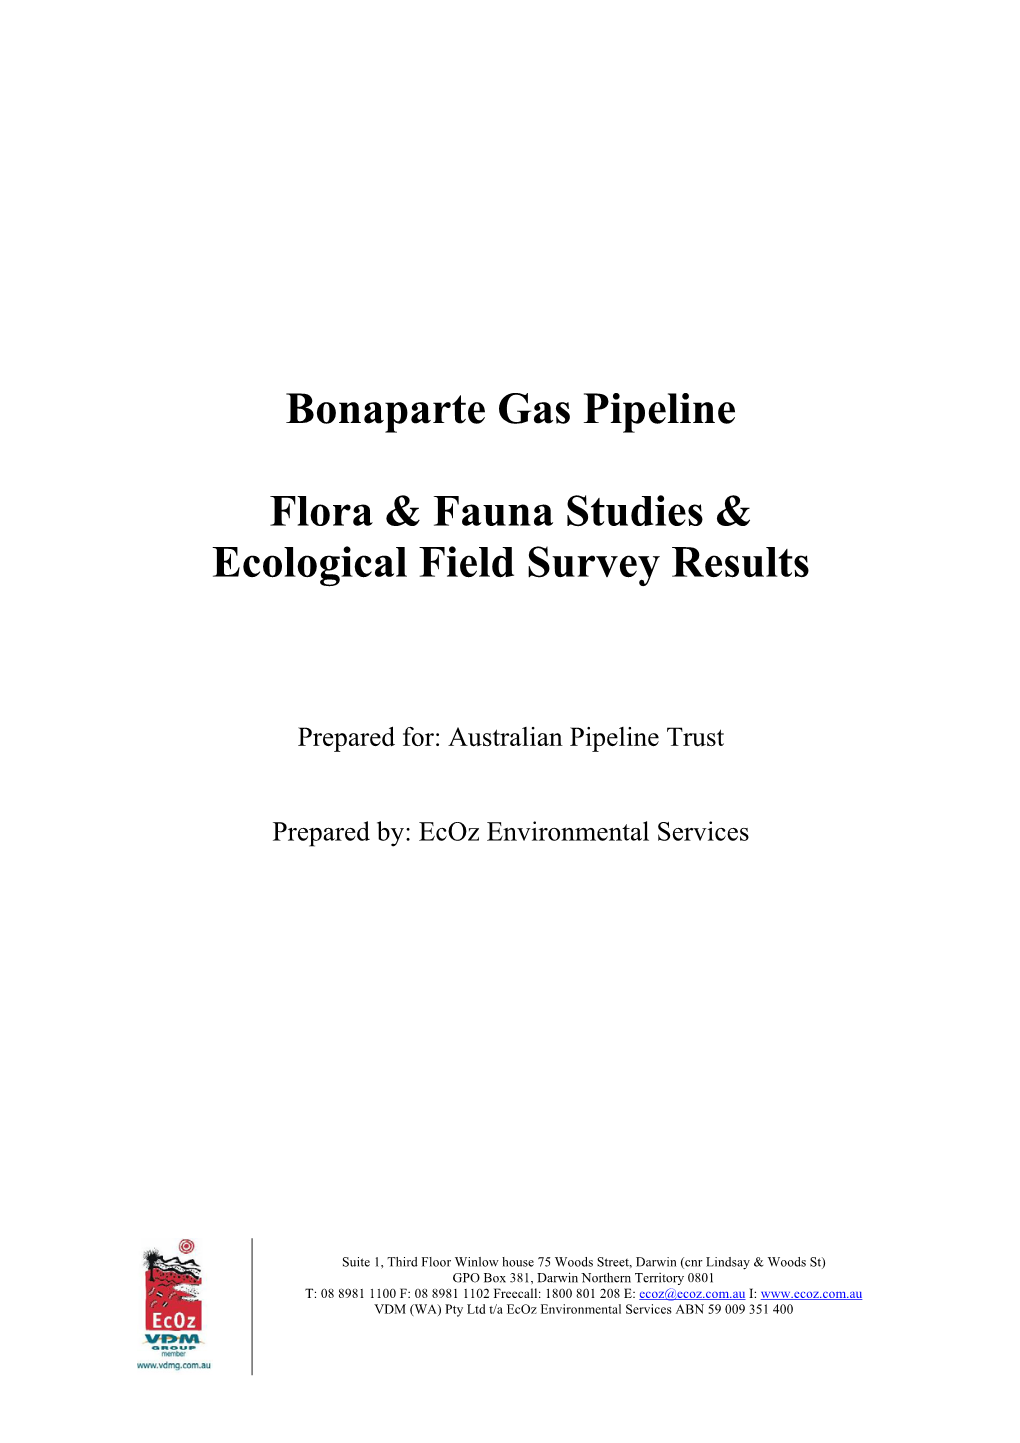 Bonaparte Gas Pipeline Flora & Fauna Studies & Ecological Field